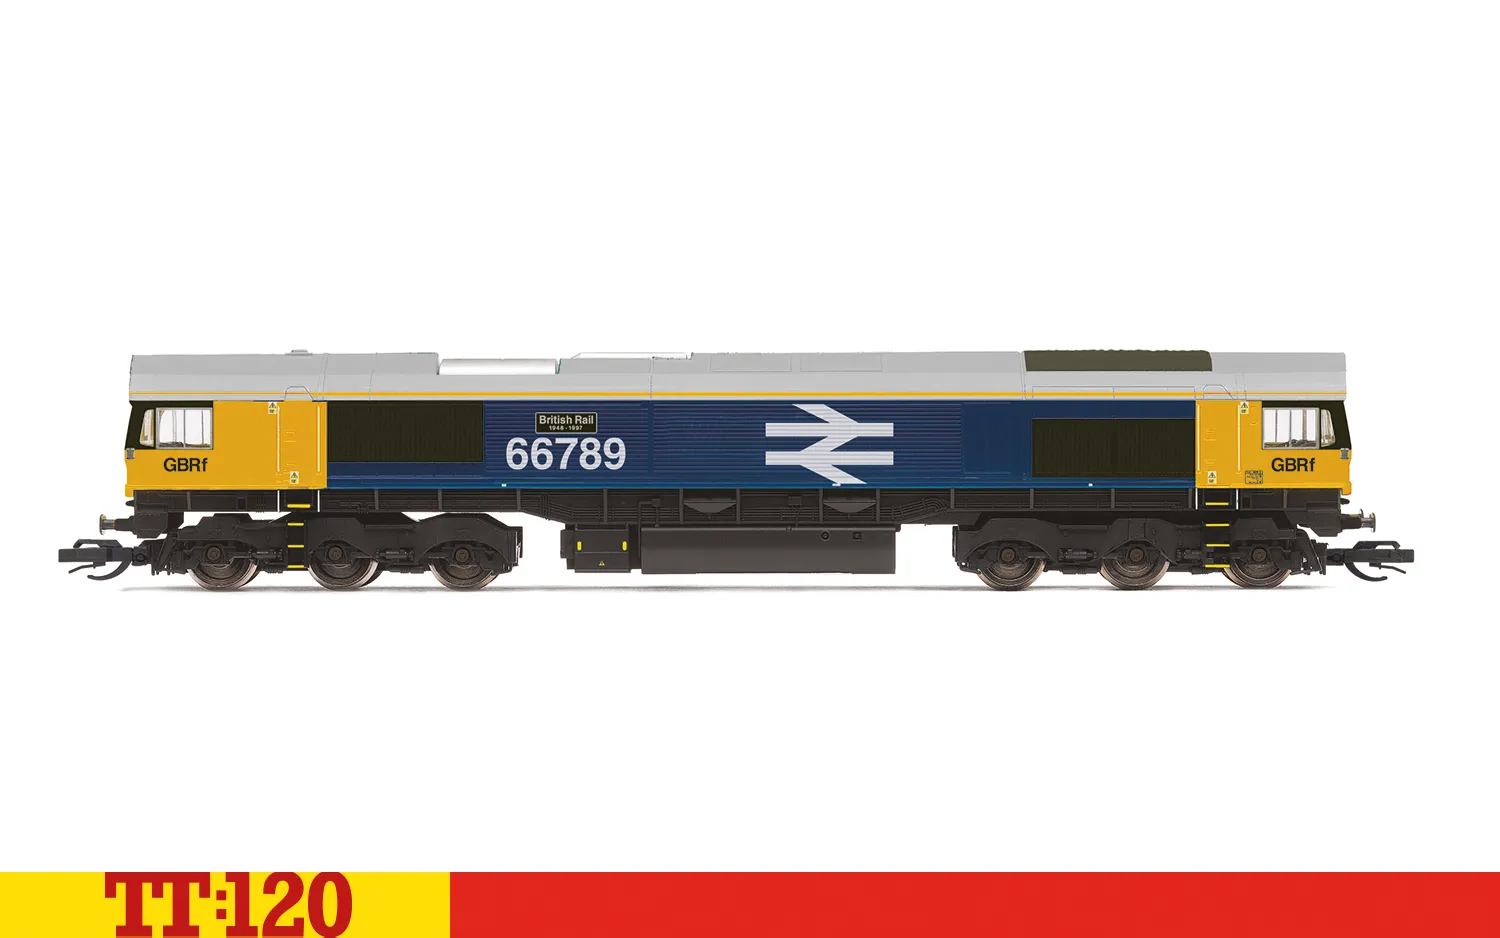 GBRf, Clase 66, Co-Co, 66789, 'British Rail 1948-1997'- Era 11